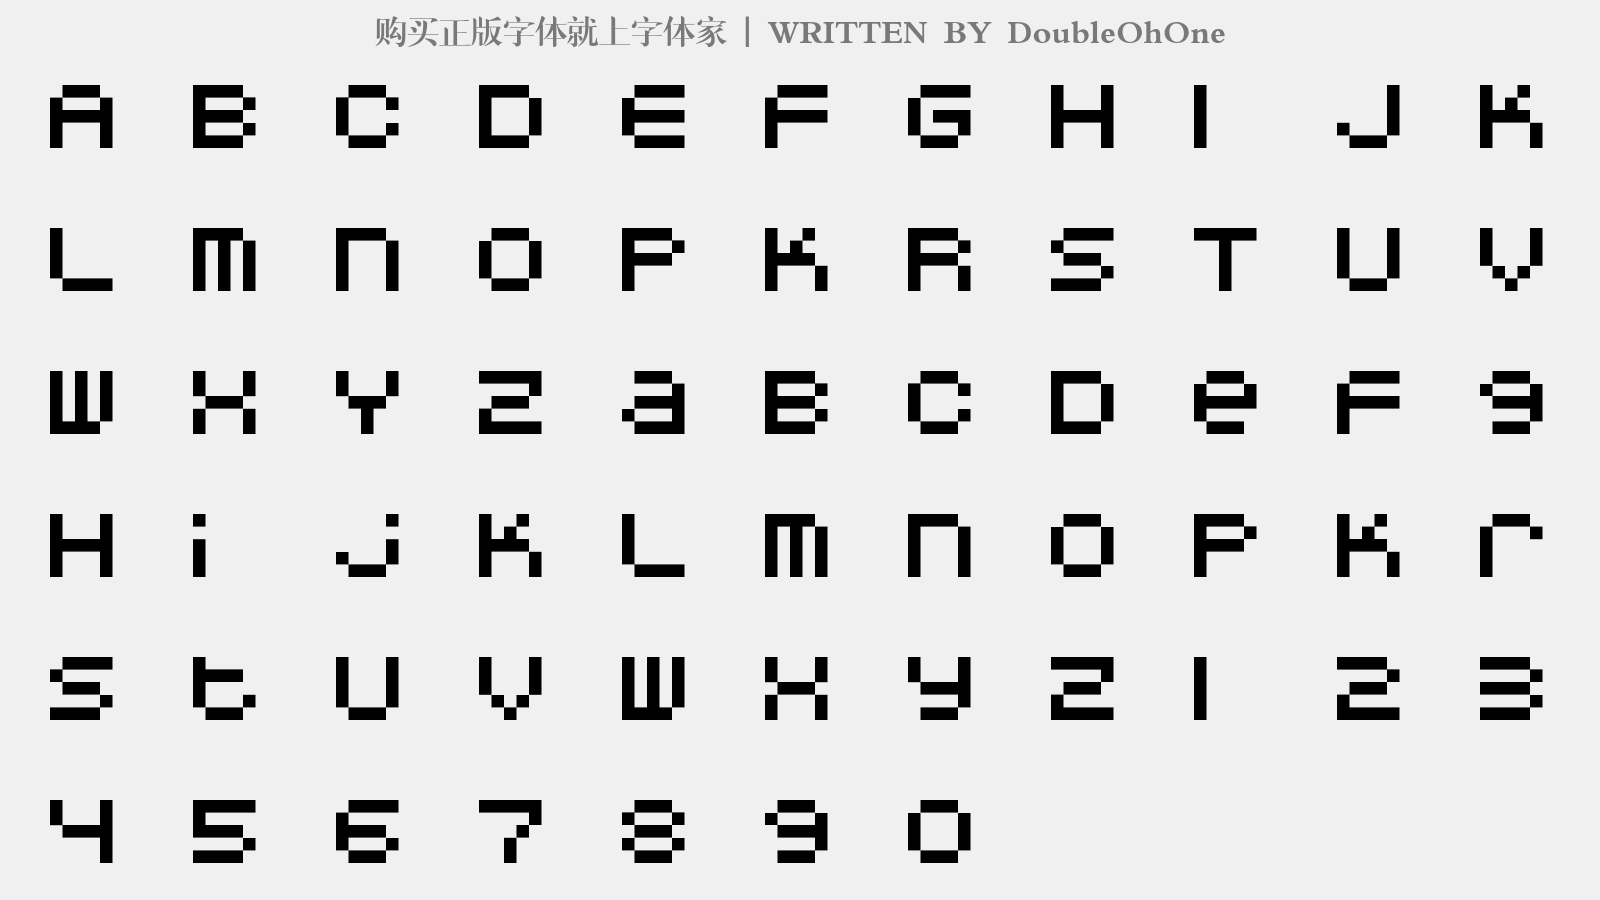 DoubleOhOne - 大写字母/小写字母/数字